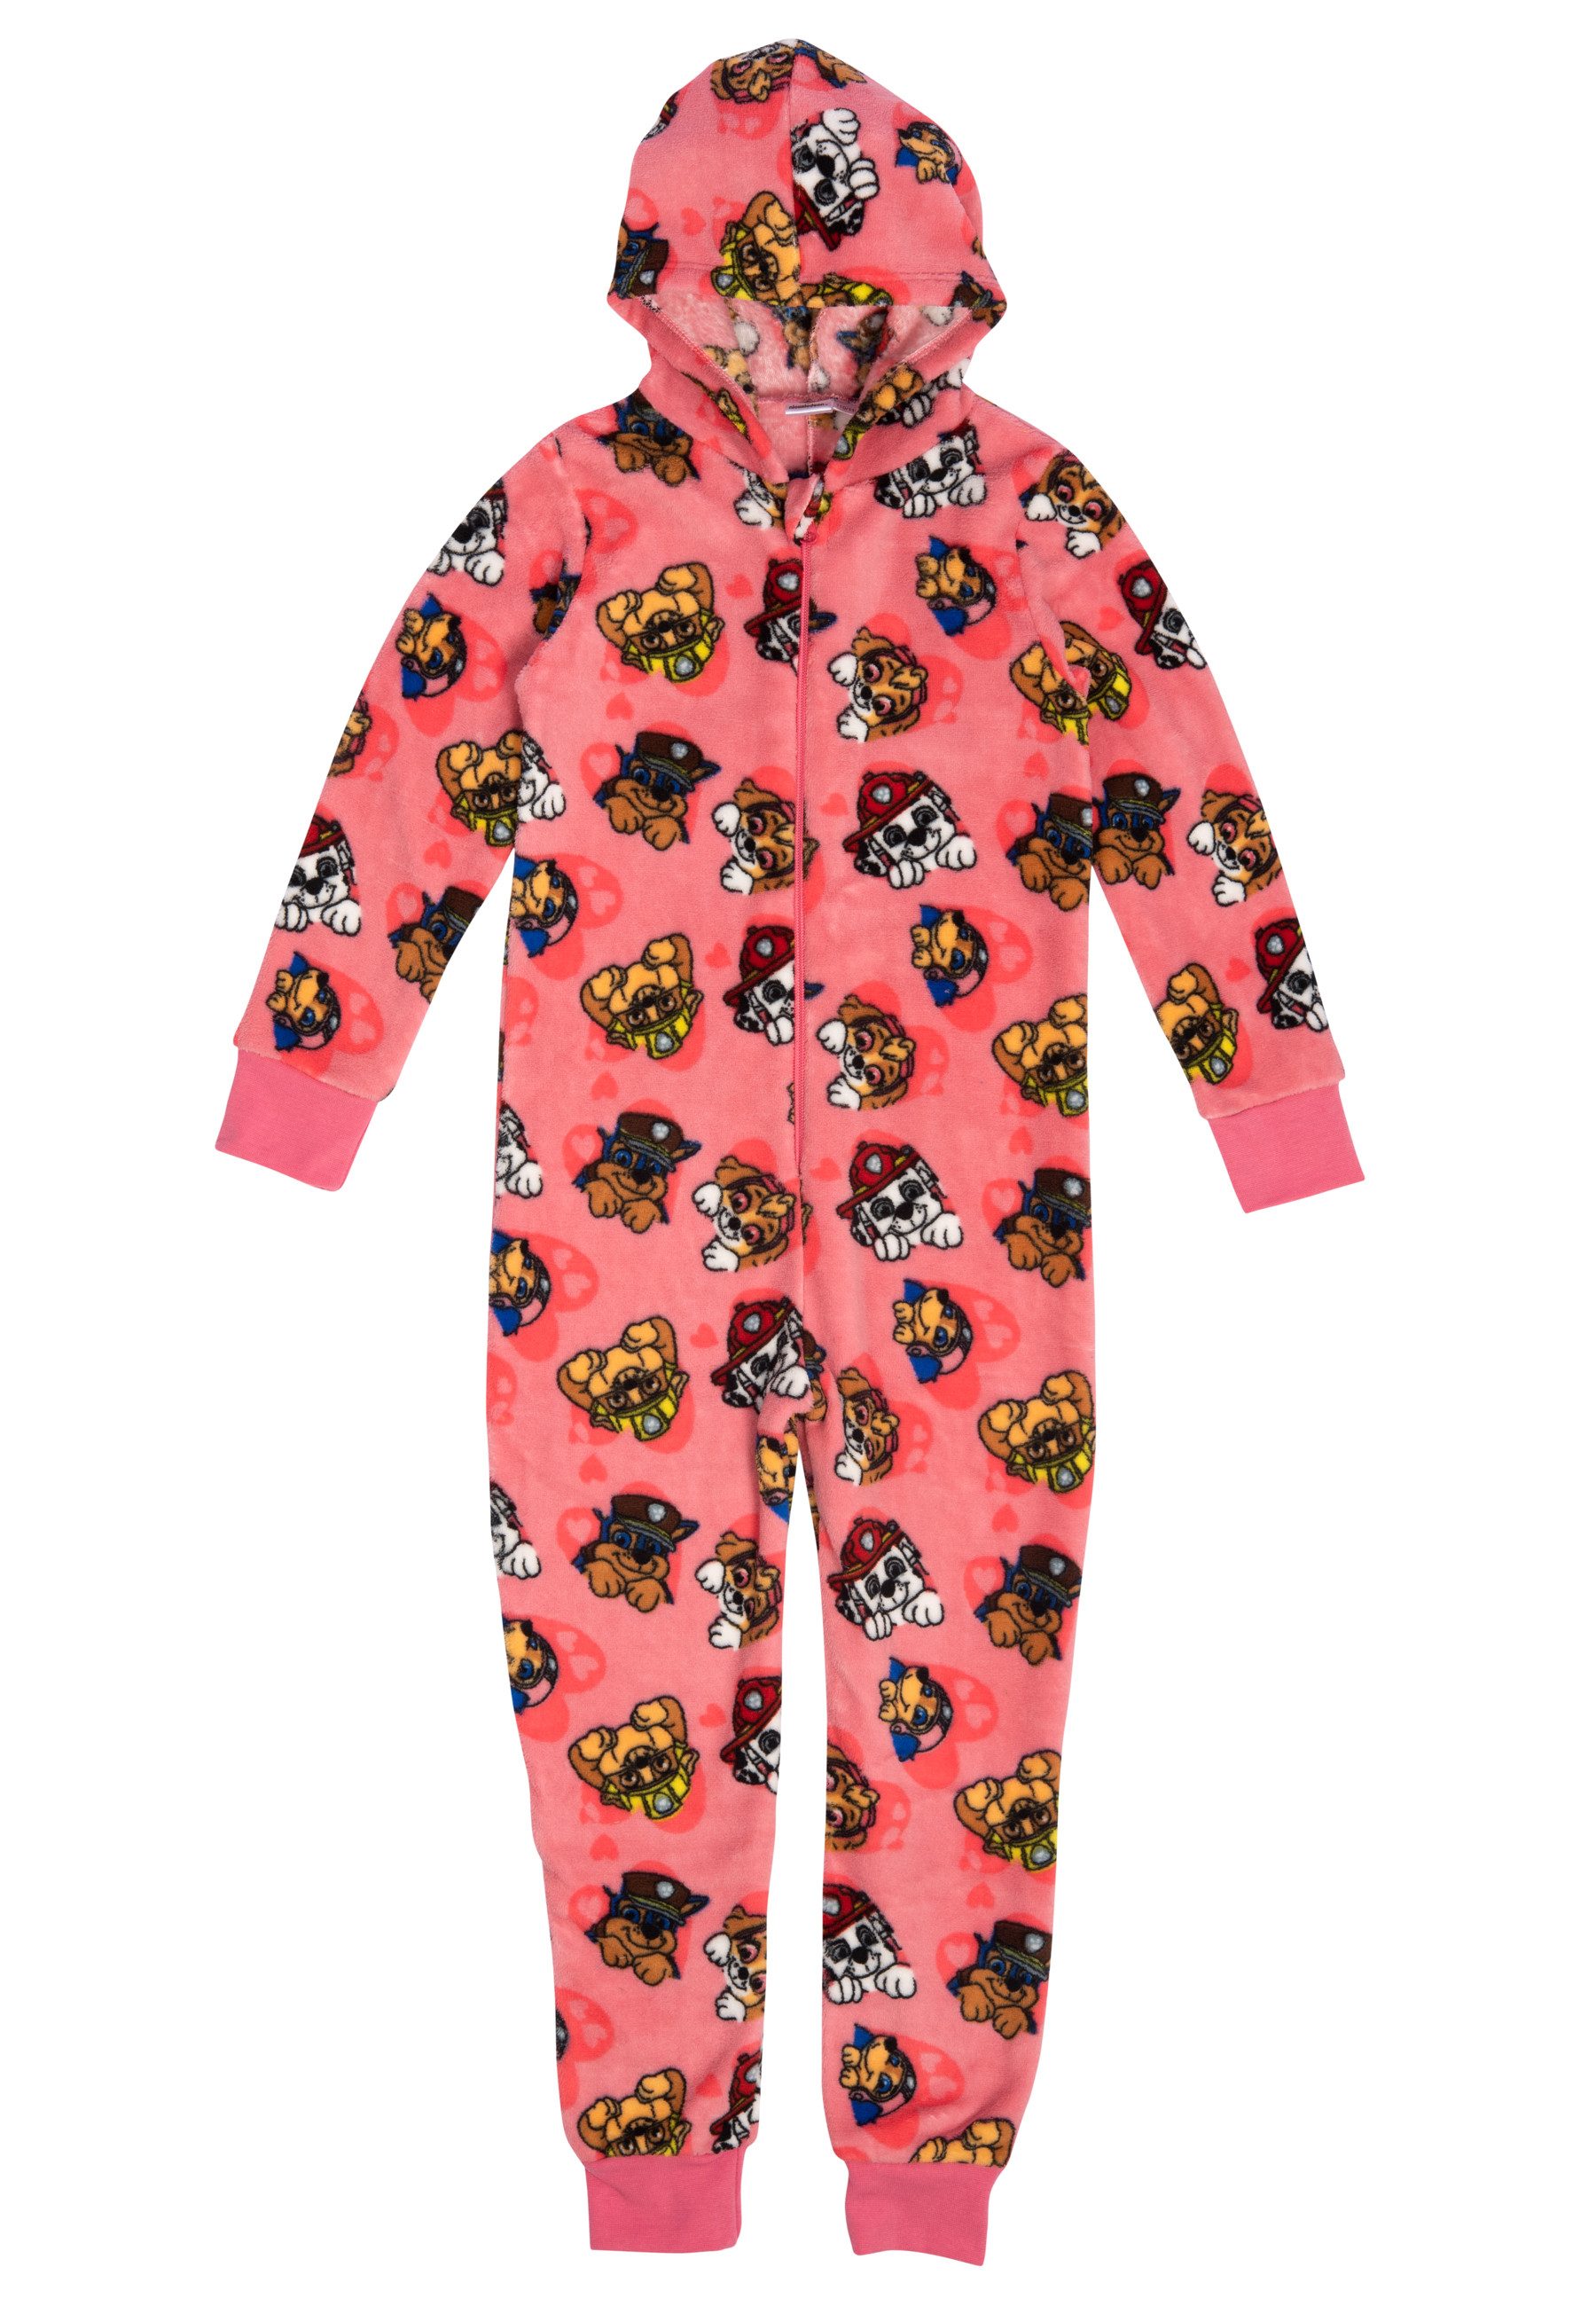 United Labels® Jumpsuit Paw Patrol Jumpsuit Kapuze Mädchen Overall Pyjama Schlafanzug Rosa